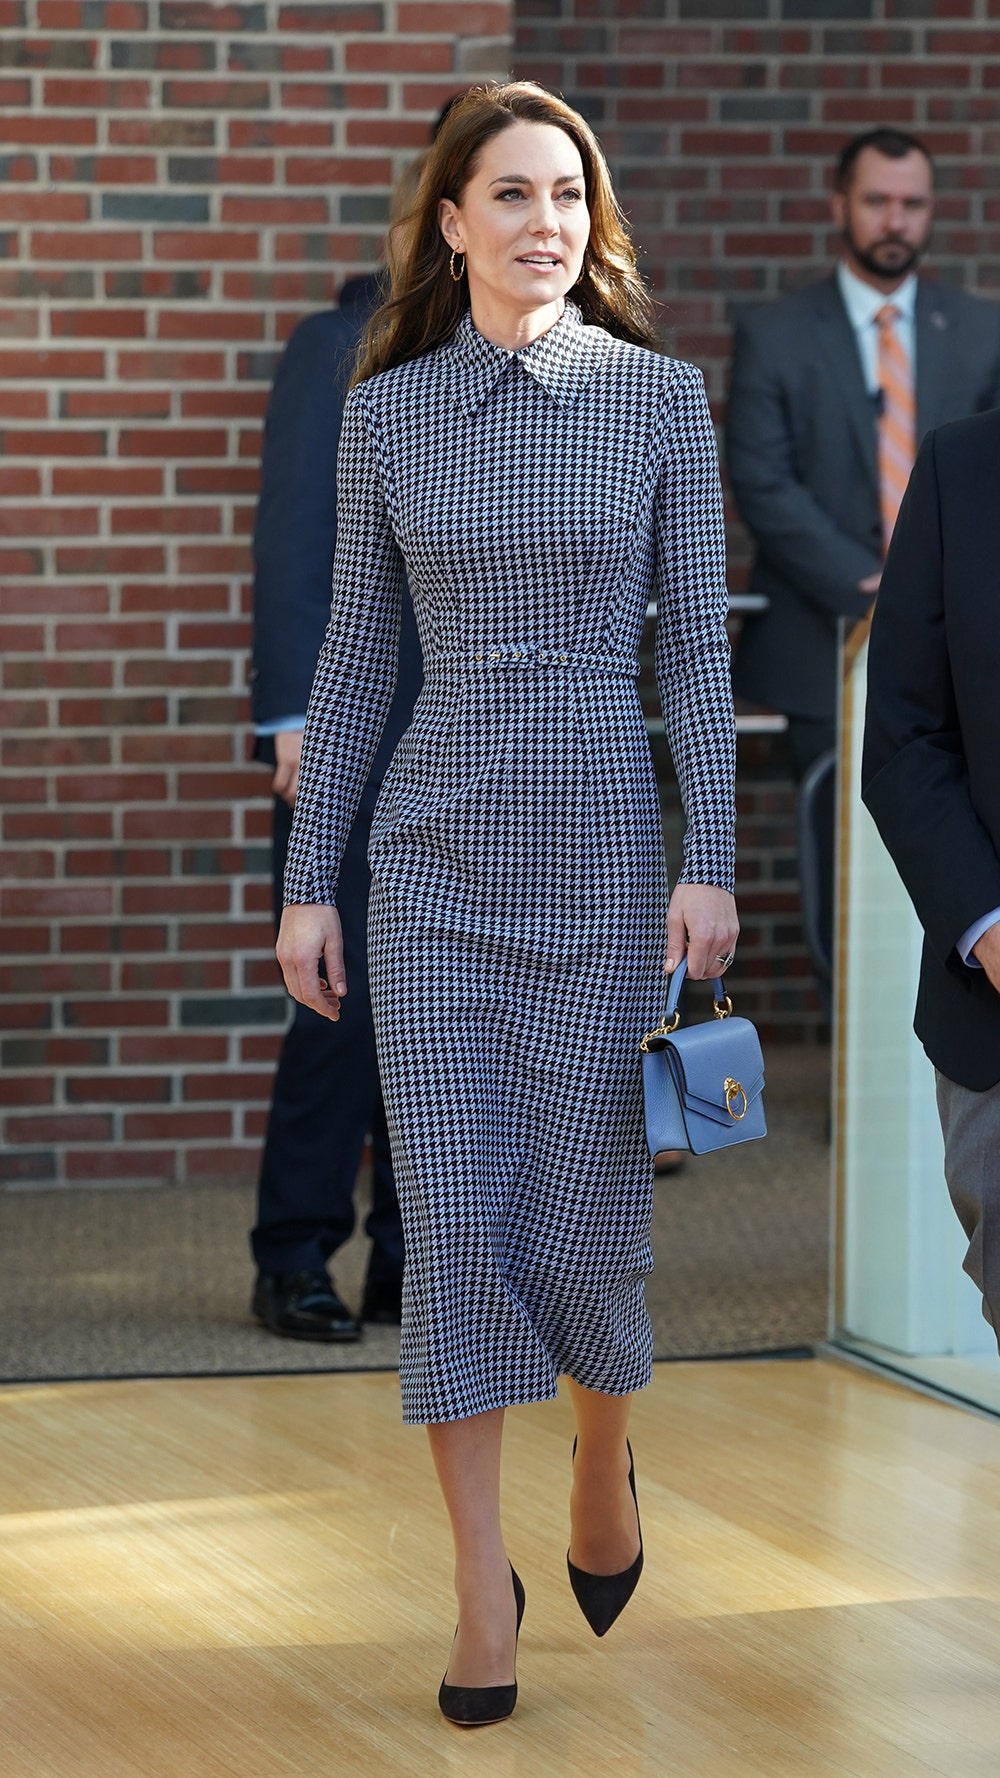 Kate Middleton holding her purse while visiting Harvard University